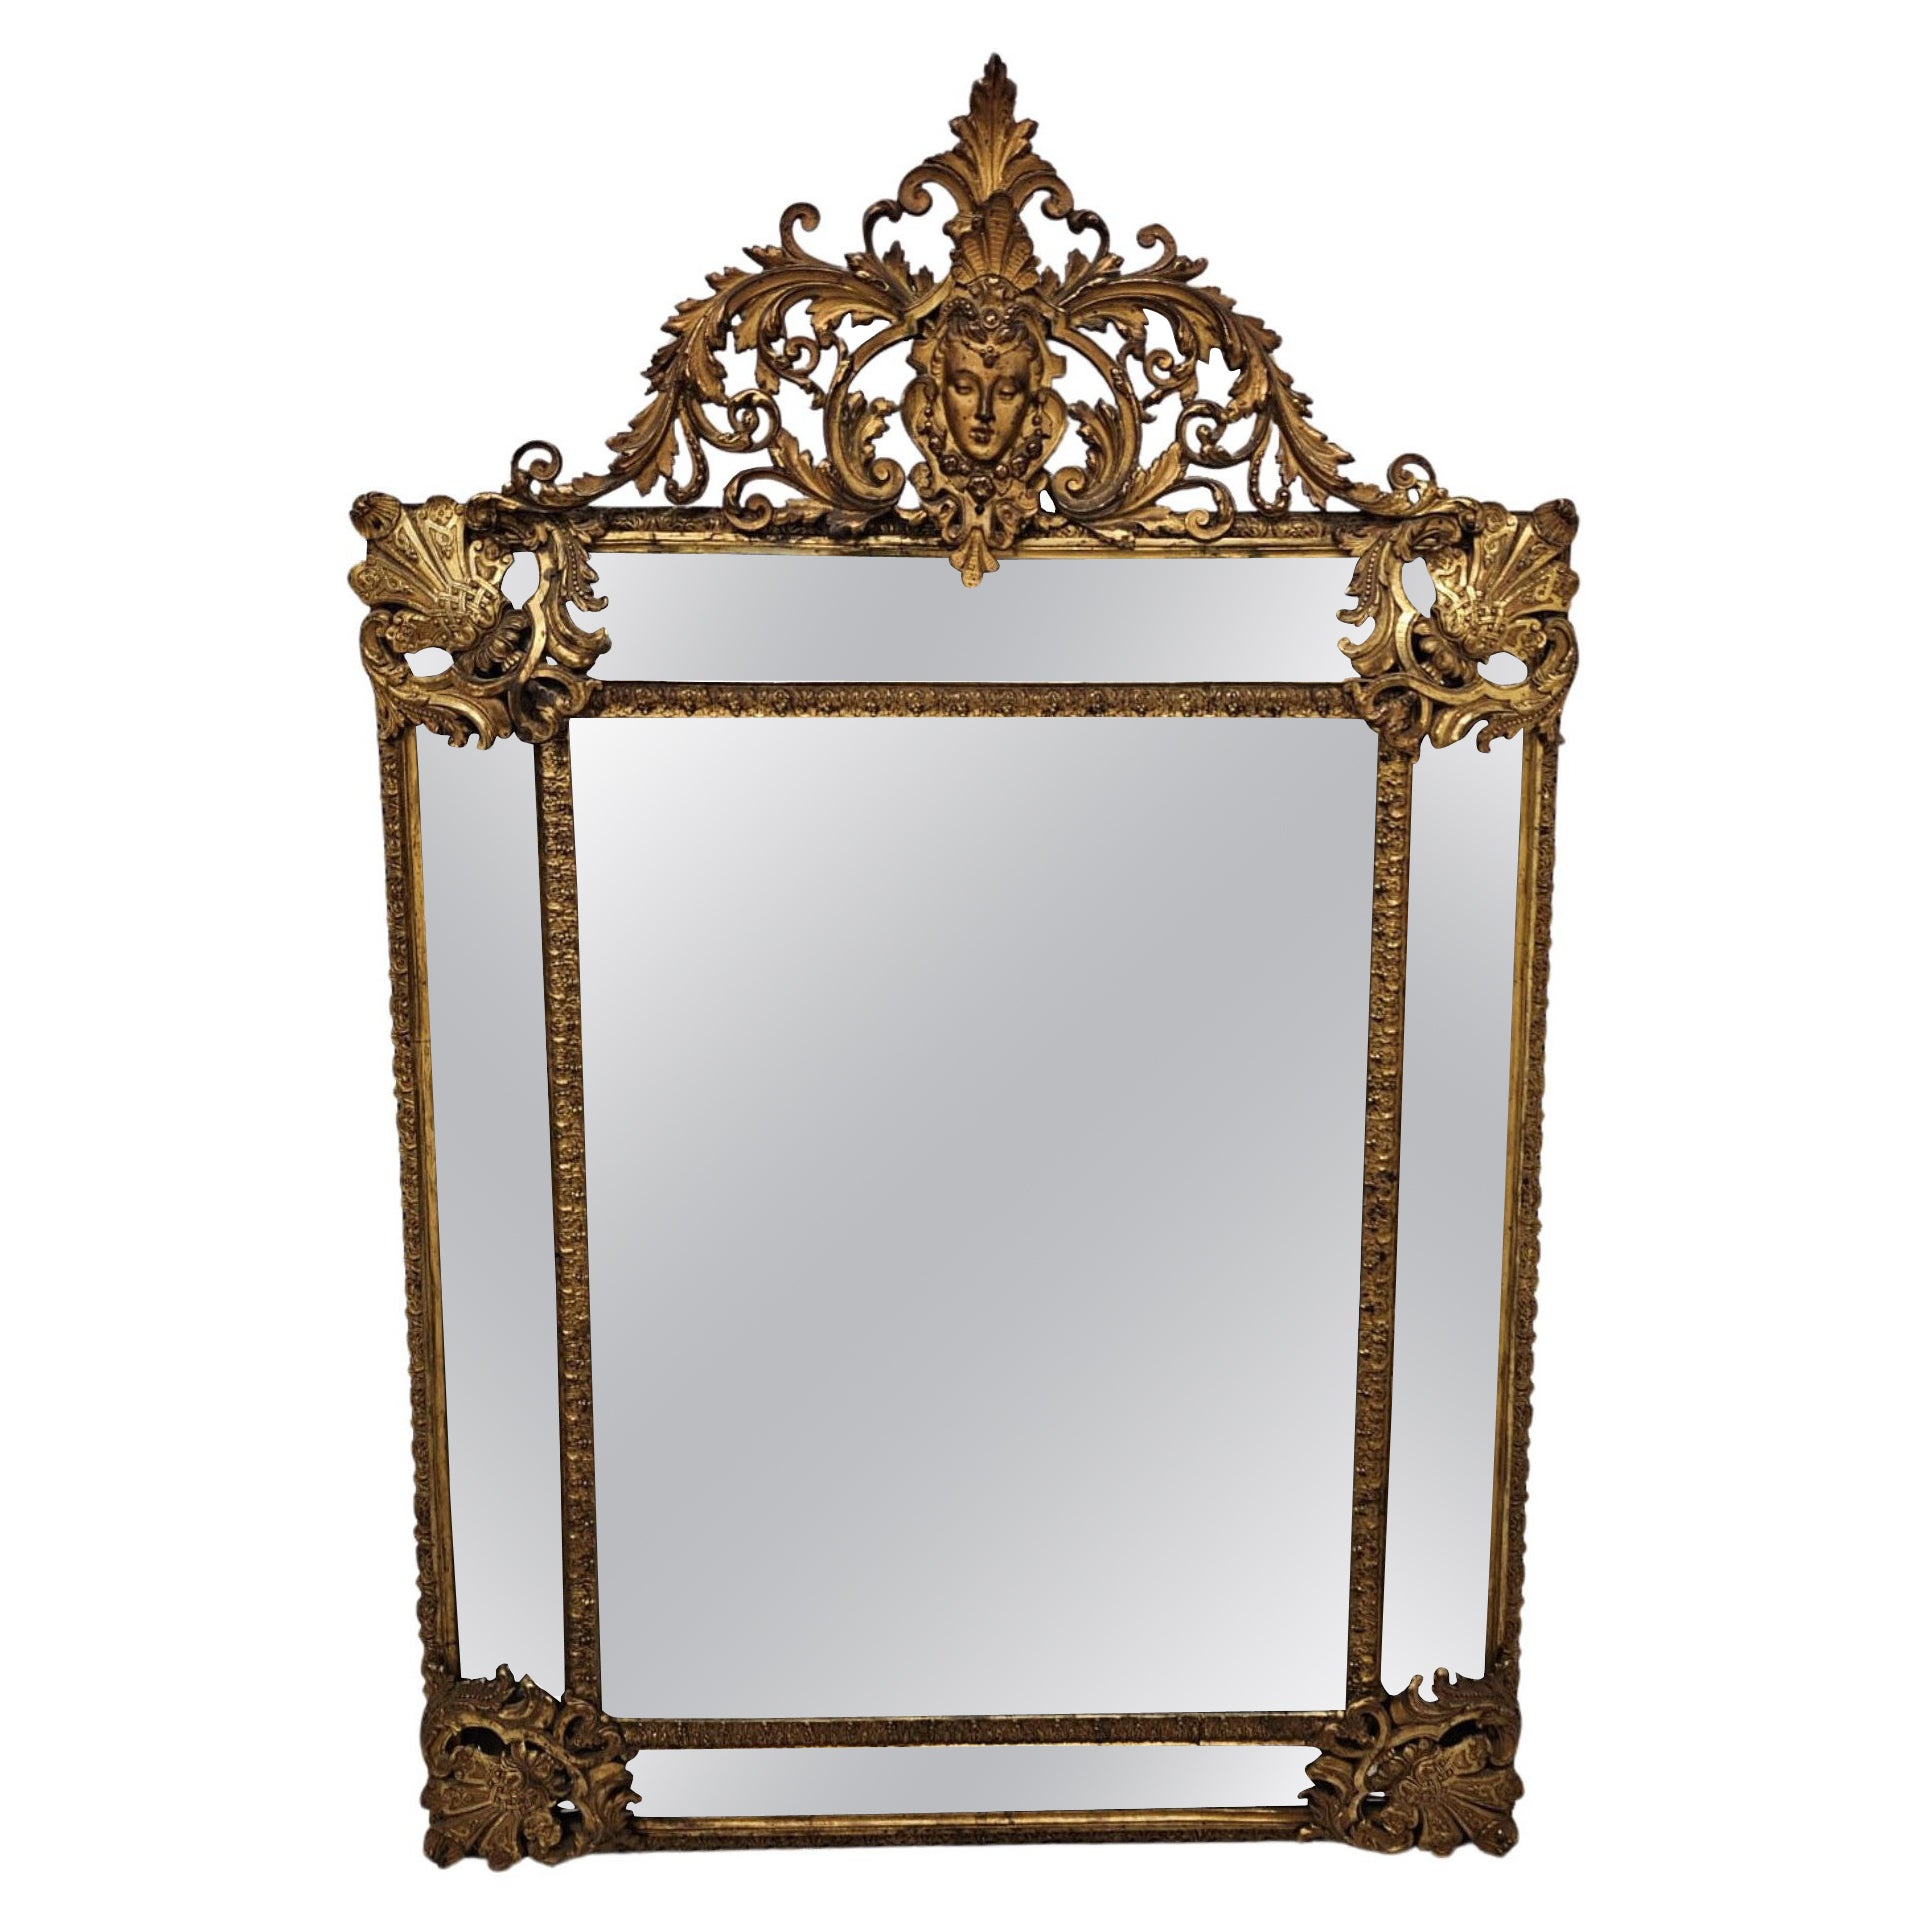 A Rare and Unusual 19th Century Cast Brass Margin Mirror For Sale